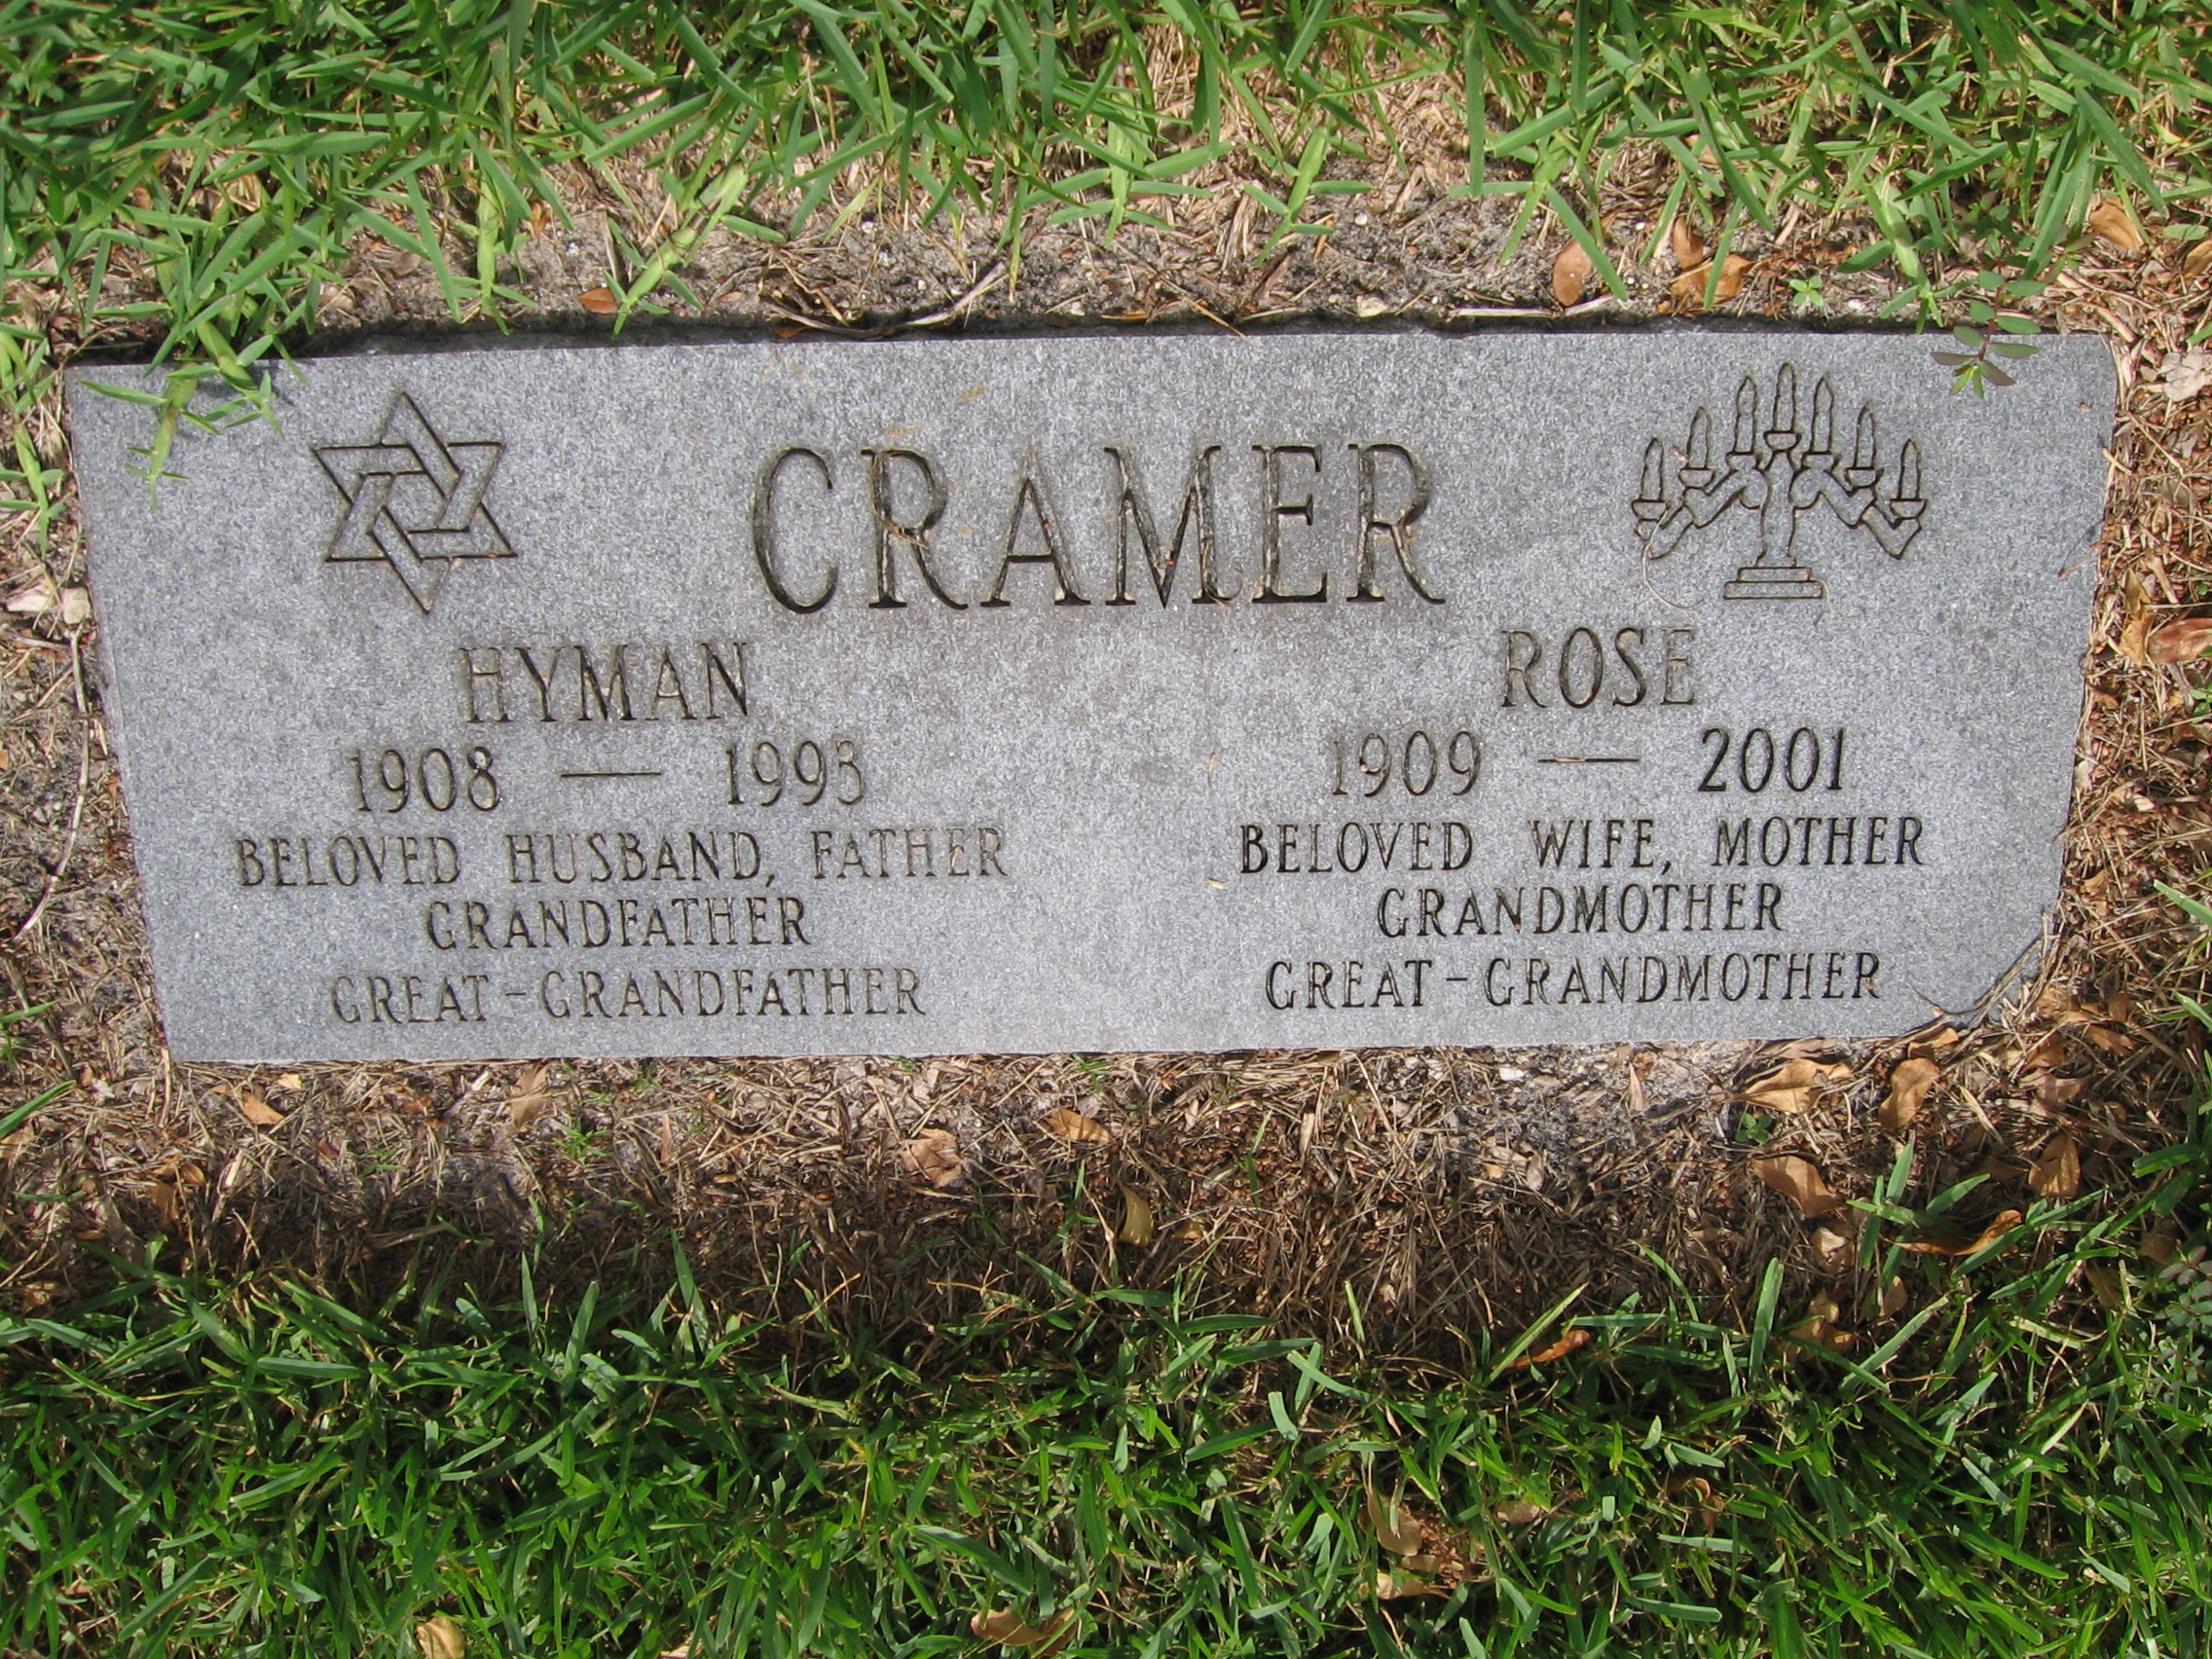 Rose Cramer